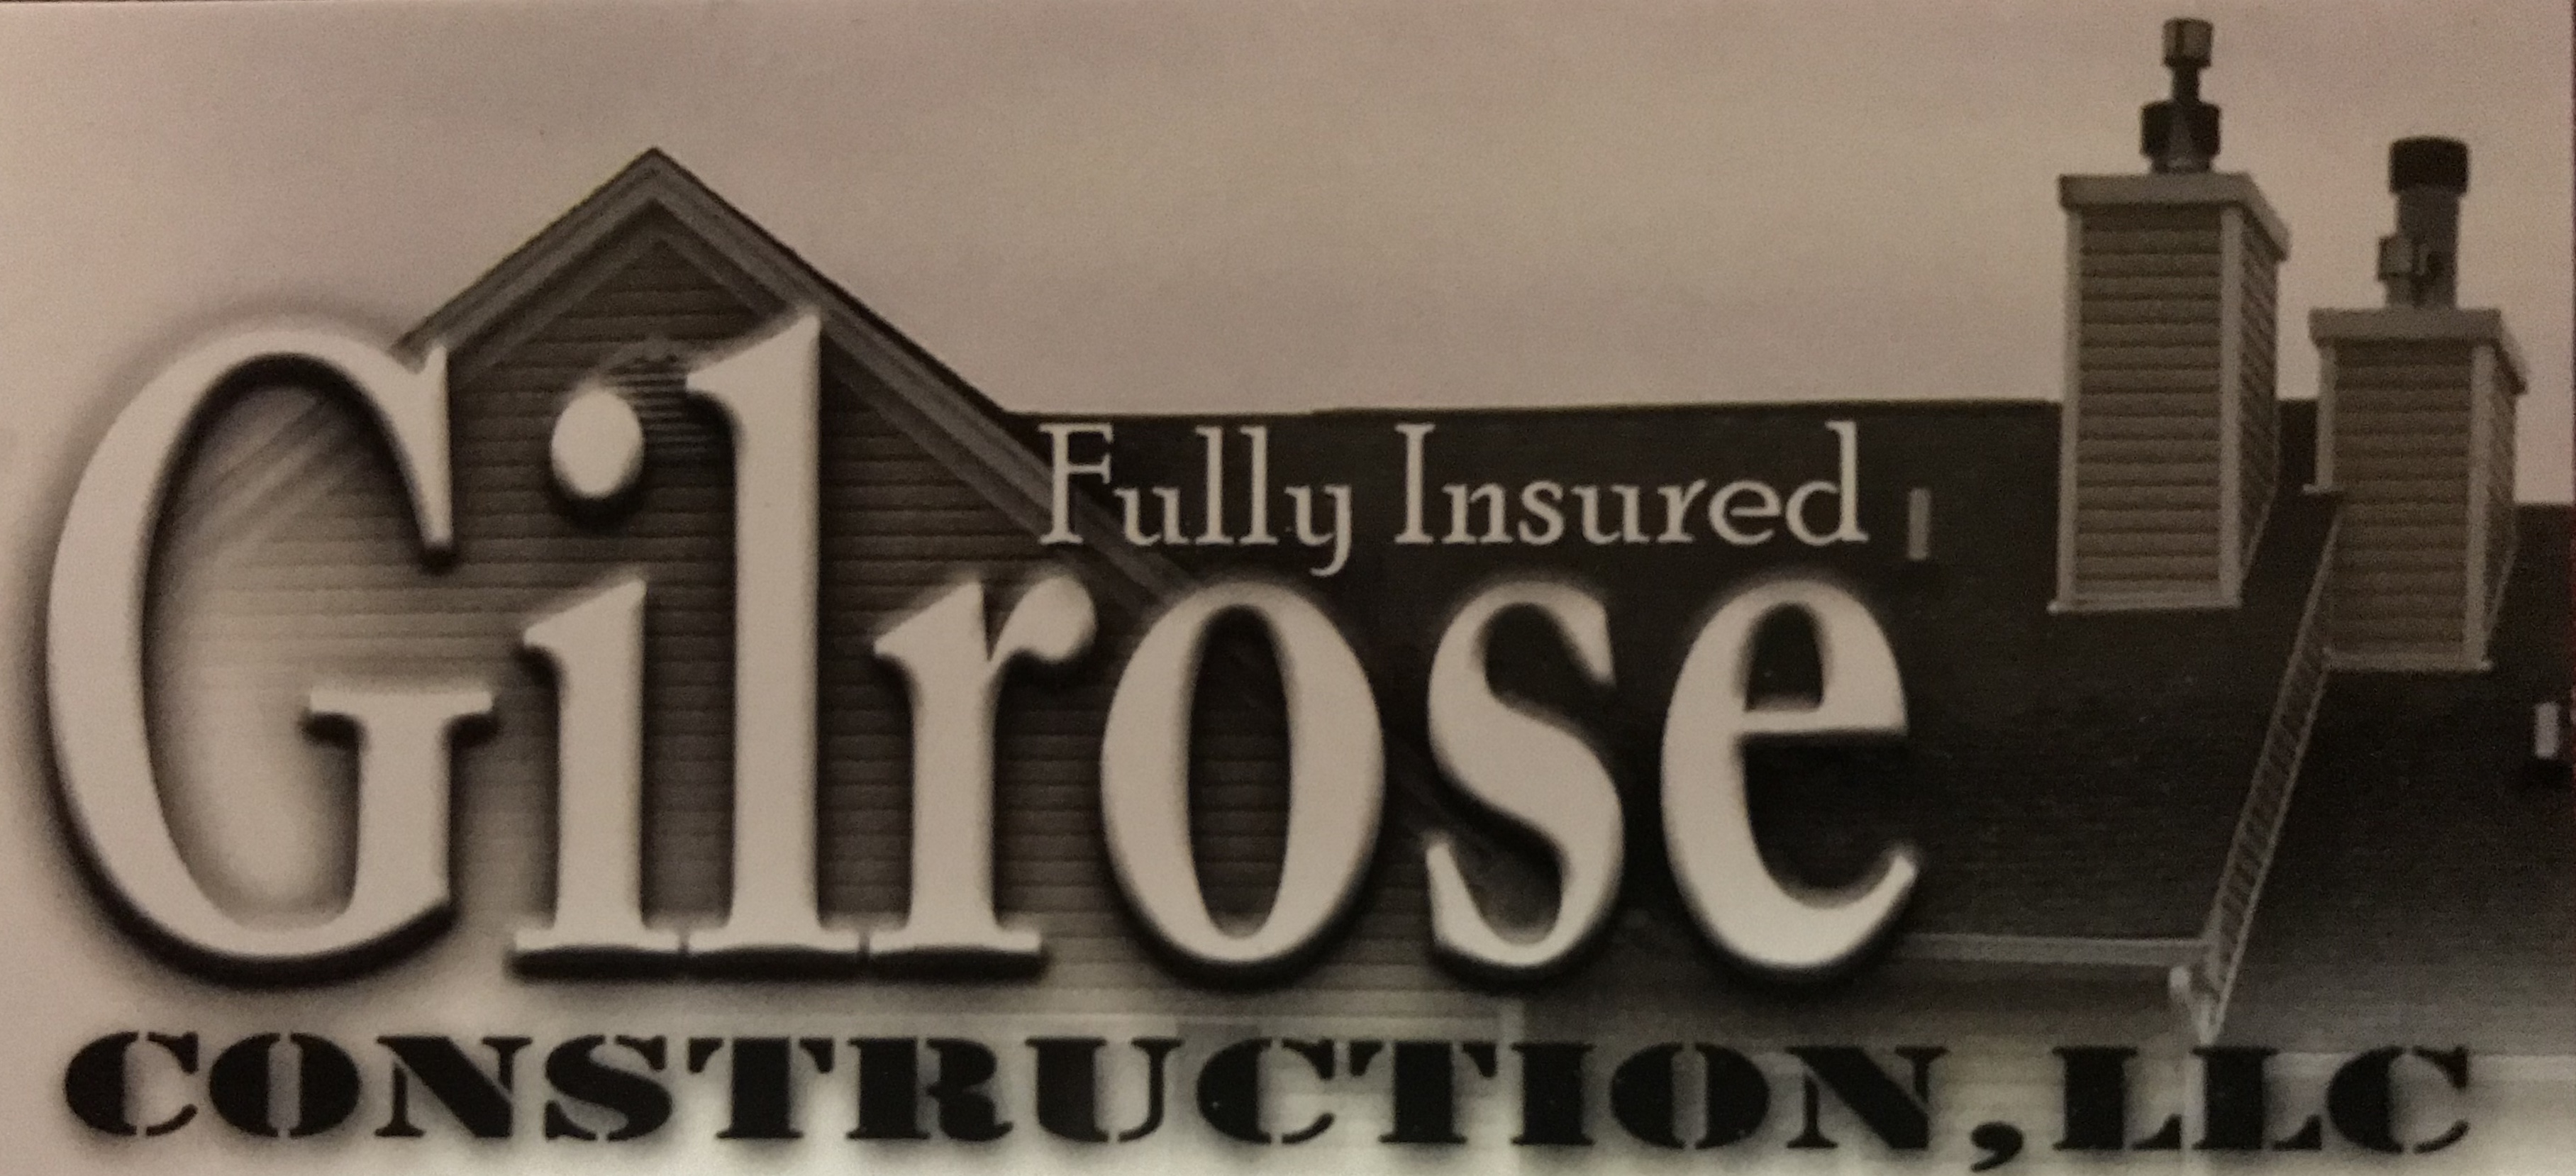 Gilrose Construction, LLC Logo